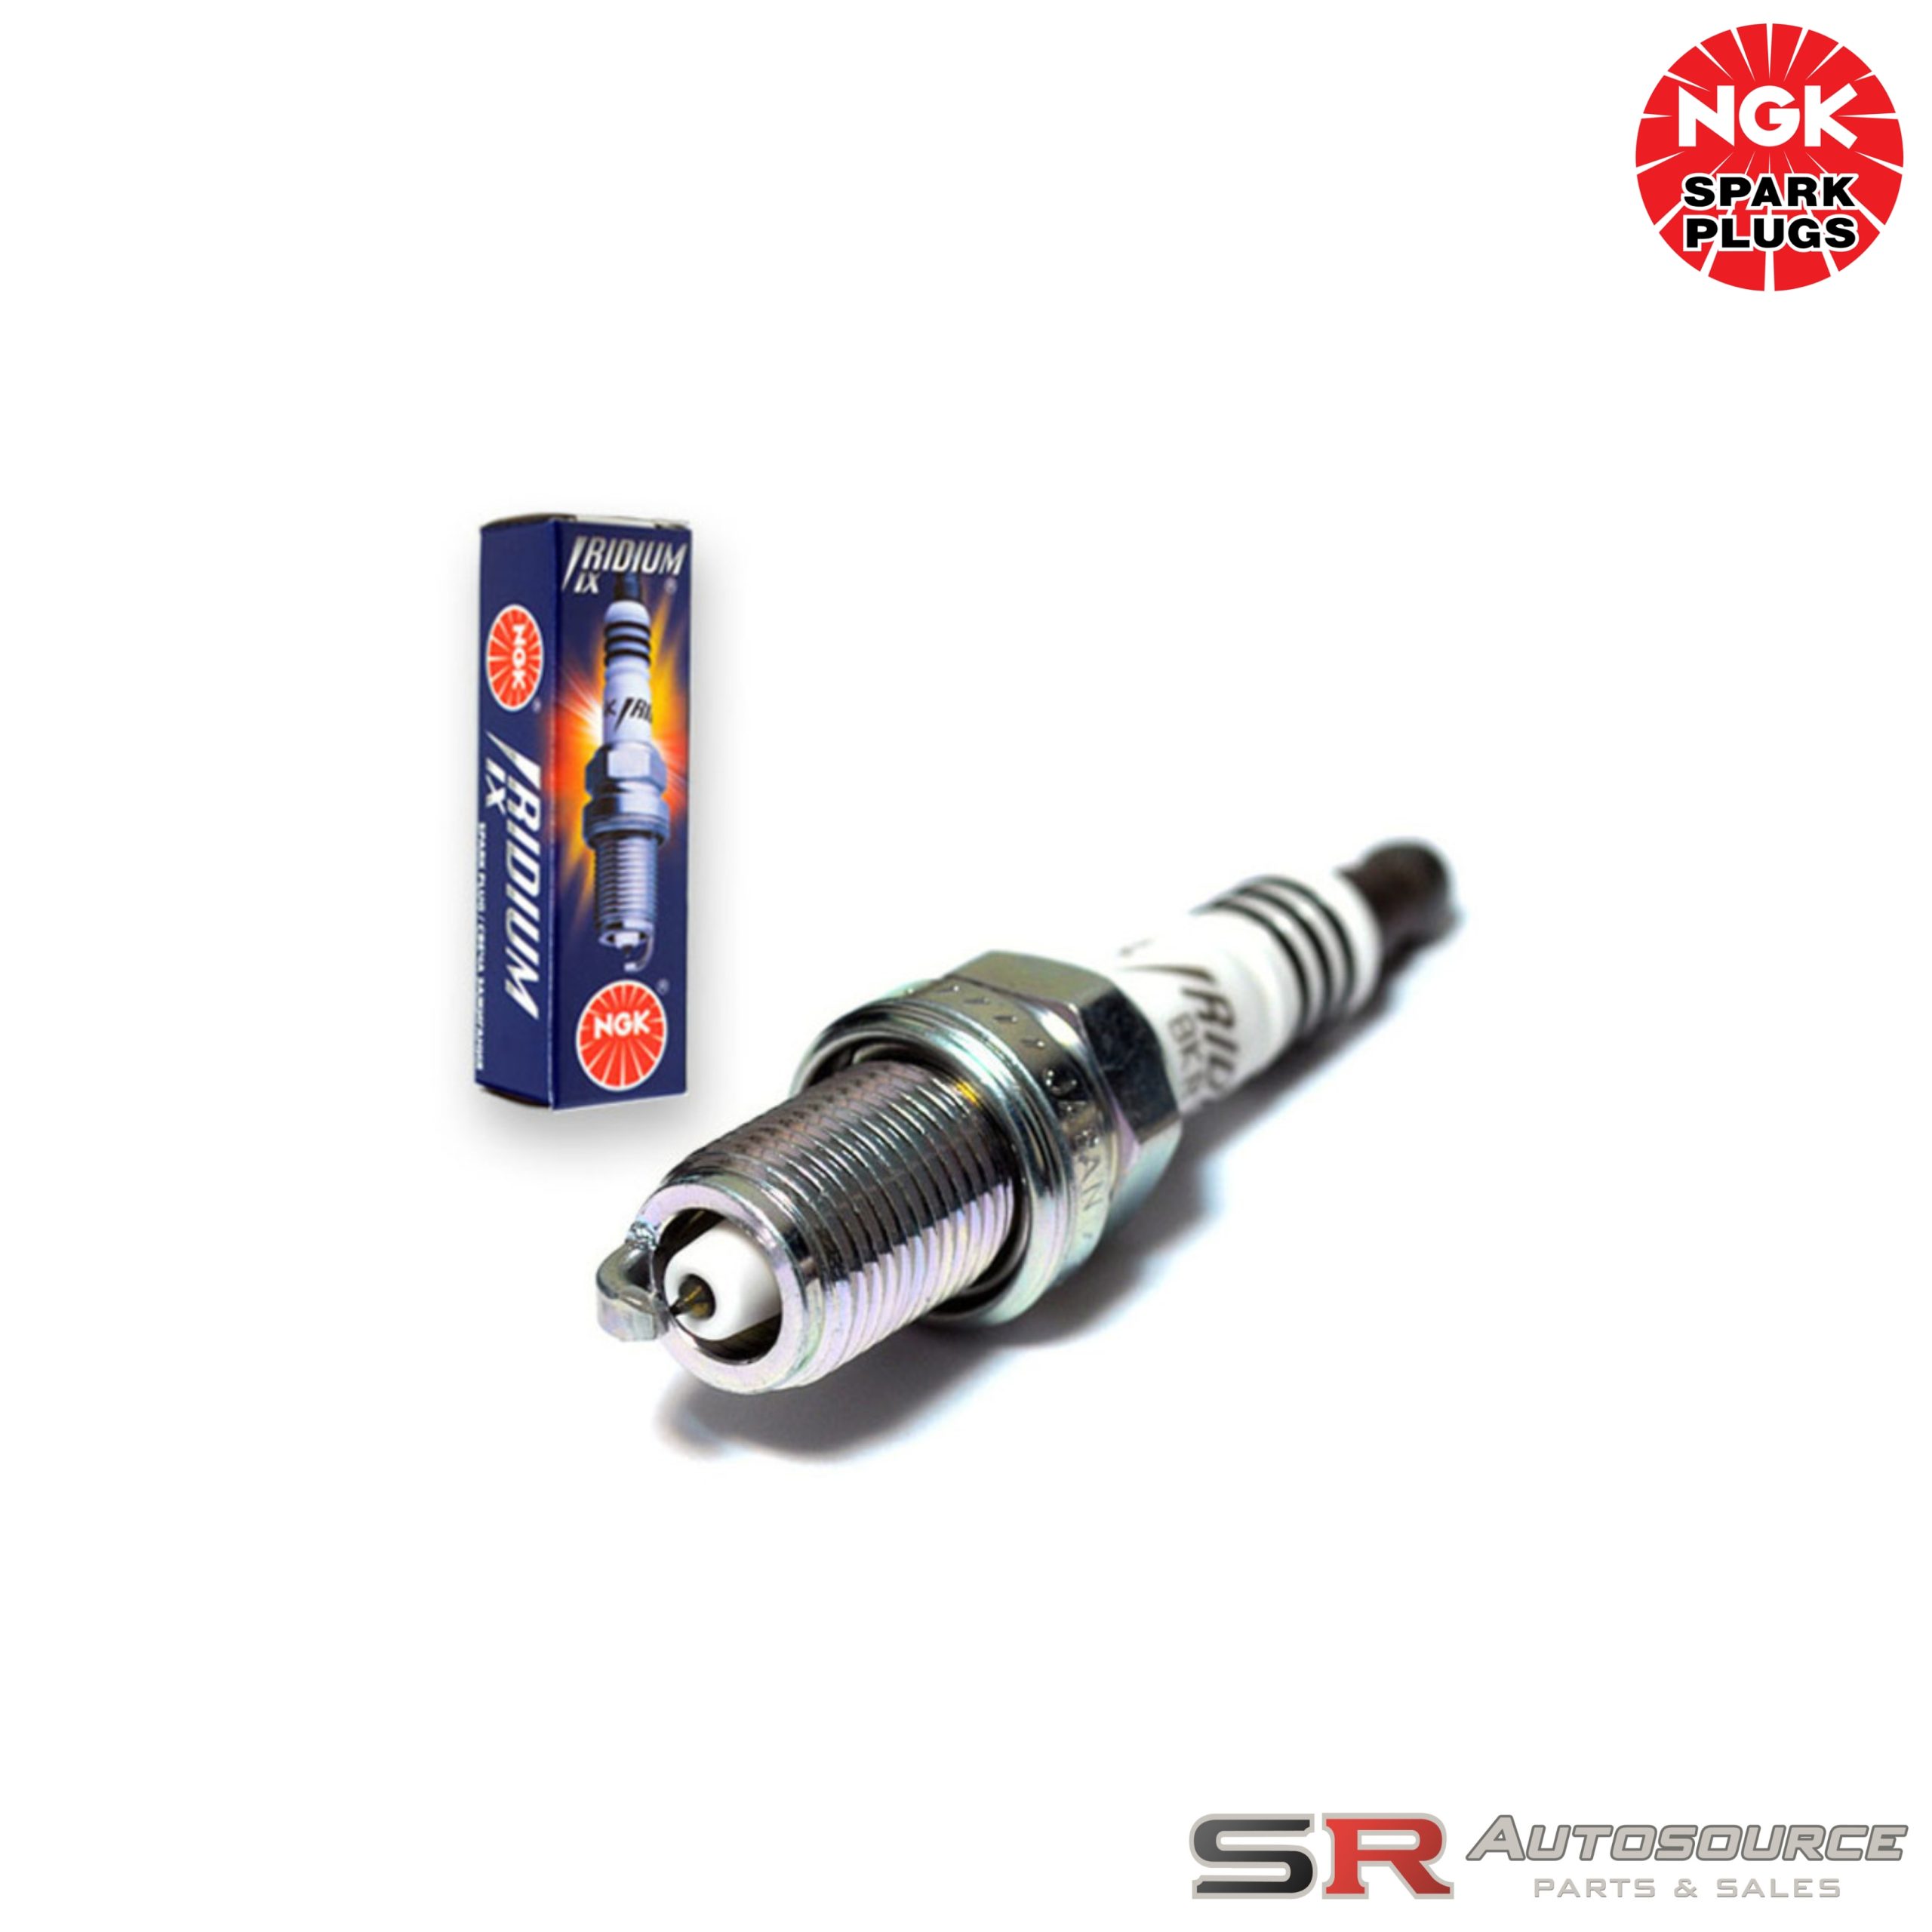 NGK Iridium Spark Plugs for SR and RB Engines